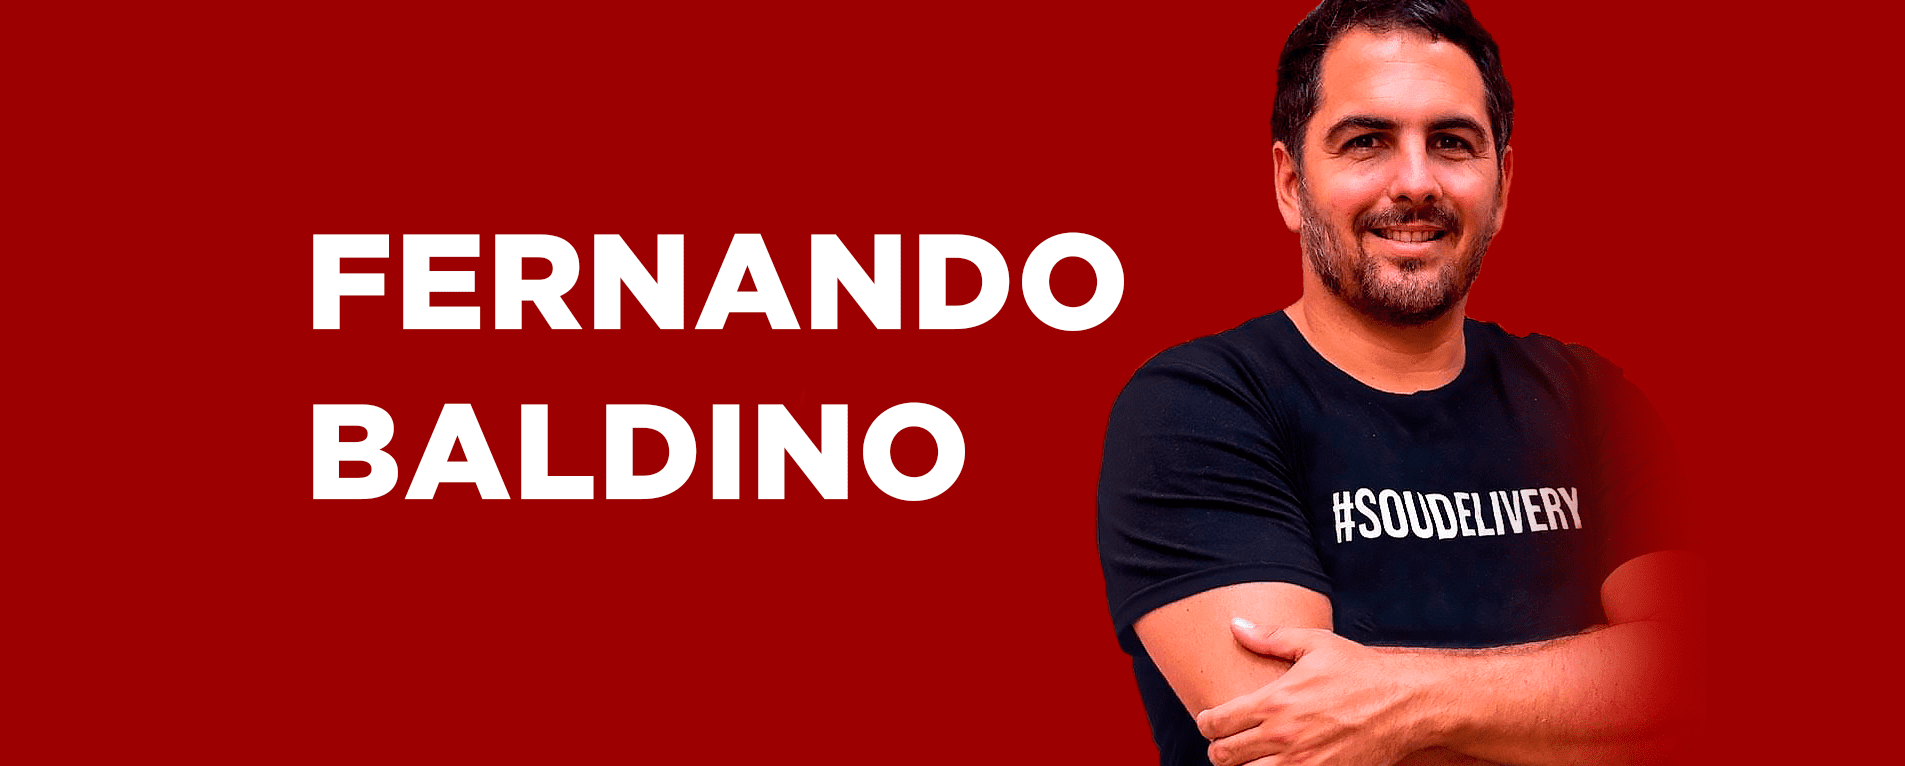 Conheça Fernando Baldino: Empreendedor e Consultor de Delivery